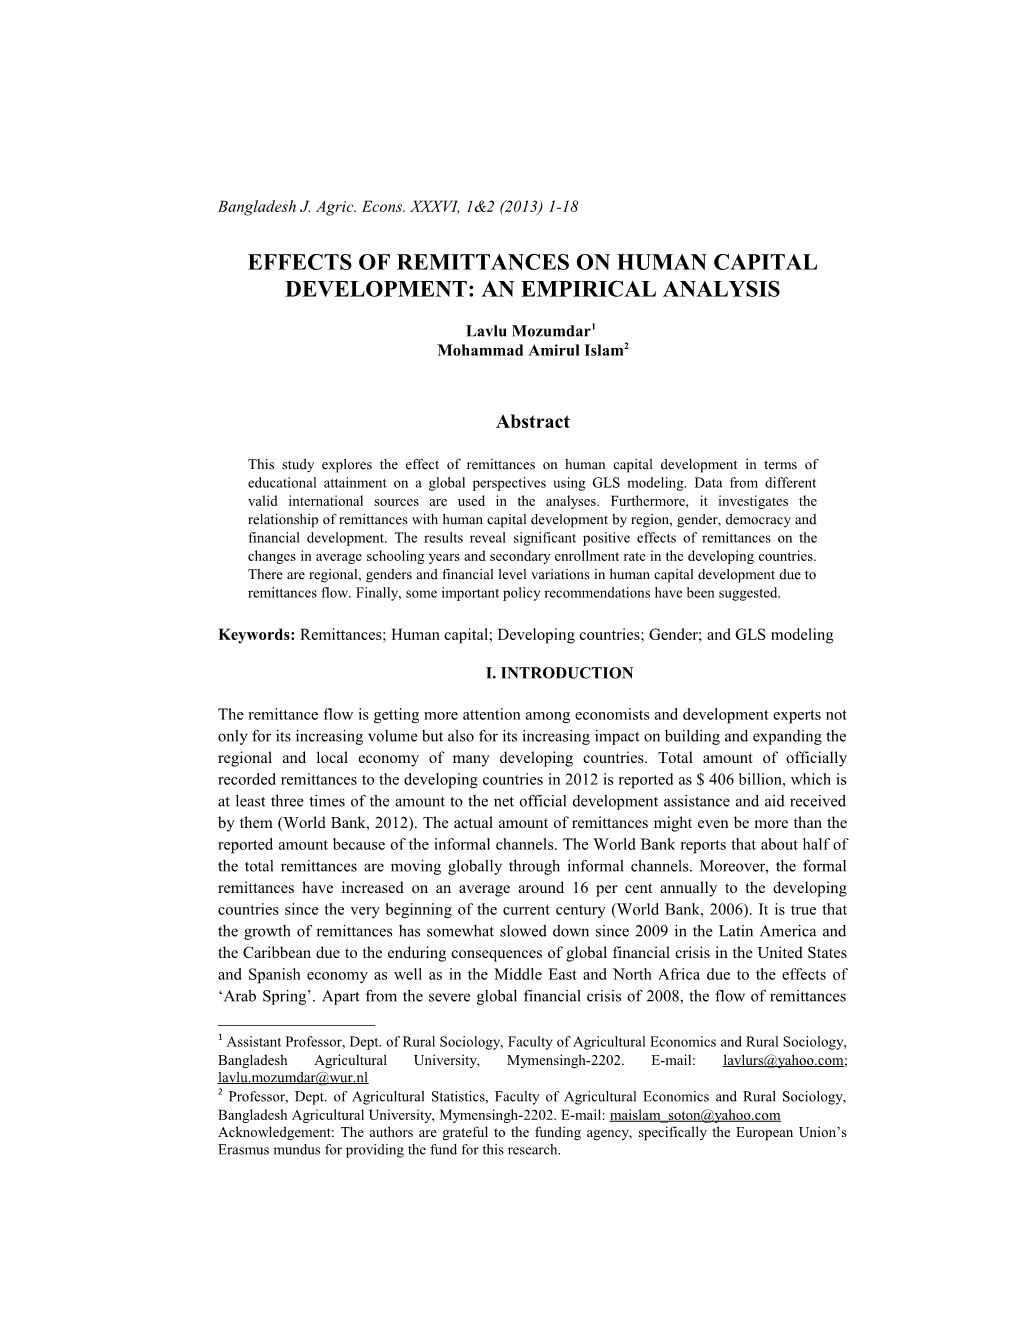 Title: Remittances and Human Capital Development: an Empirical Analysis